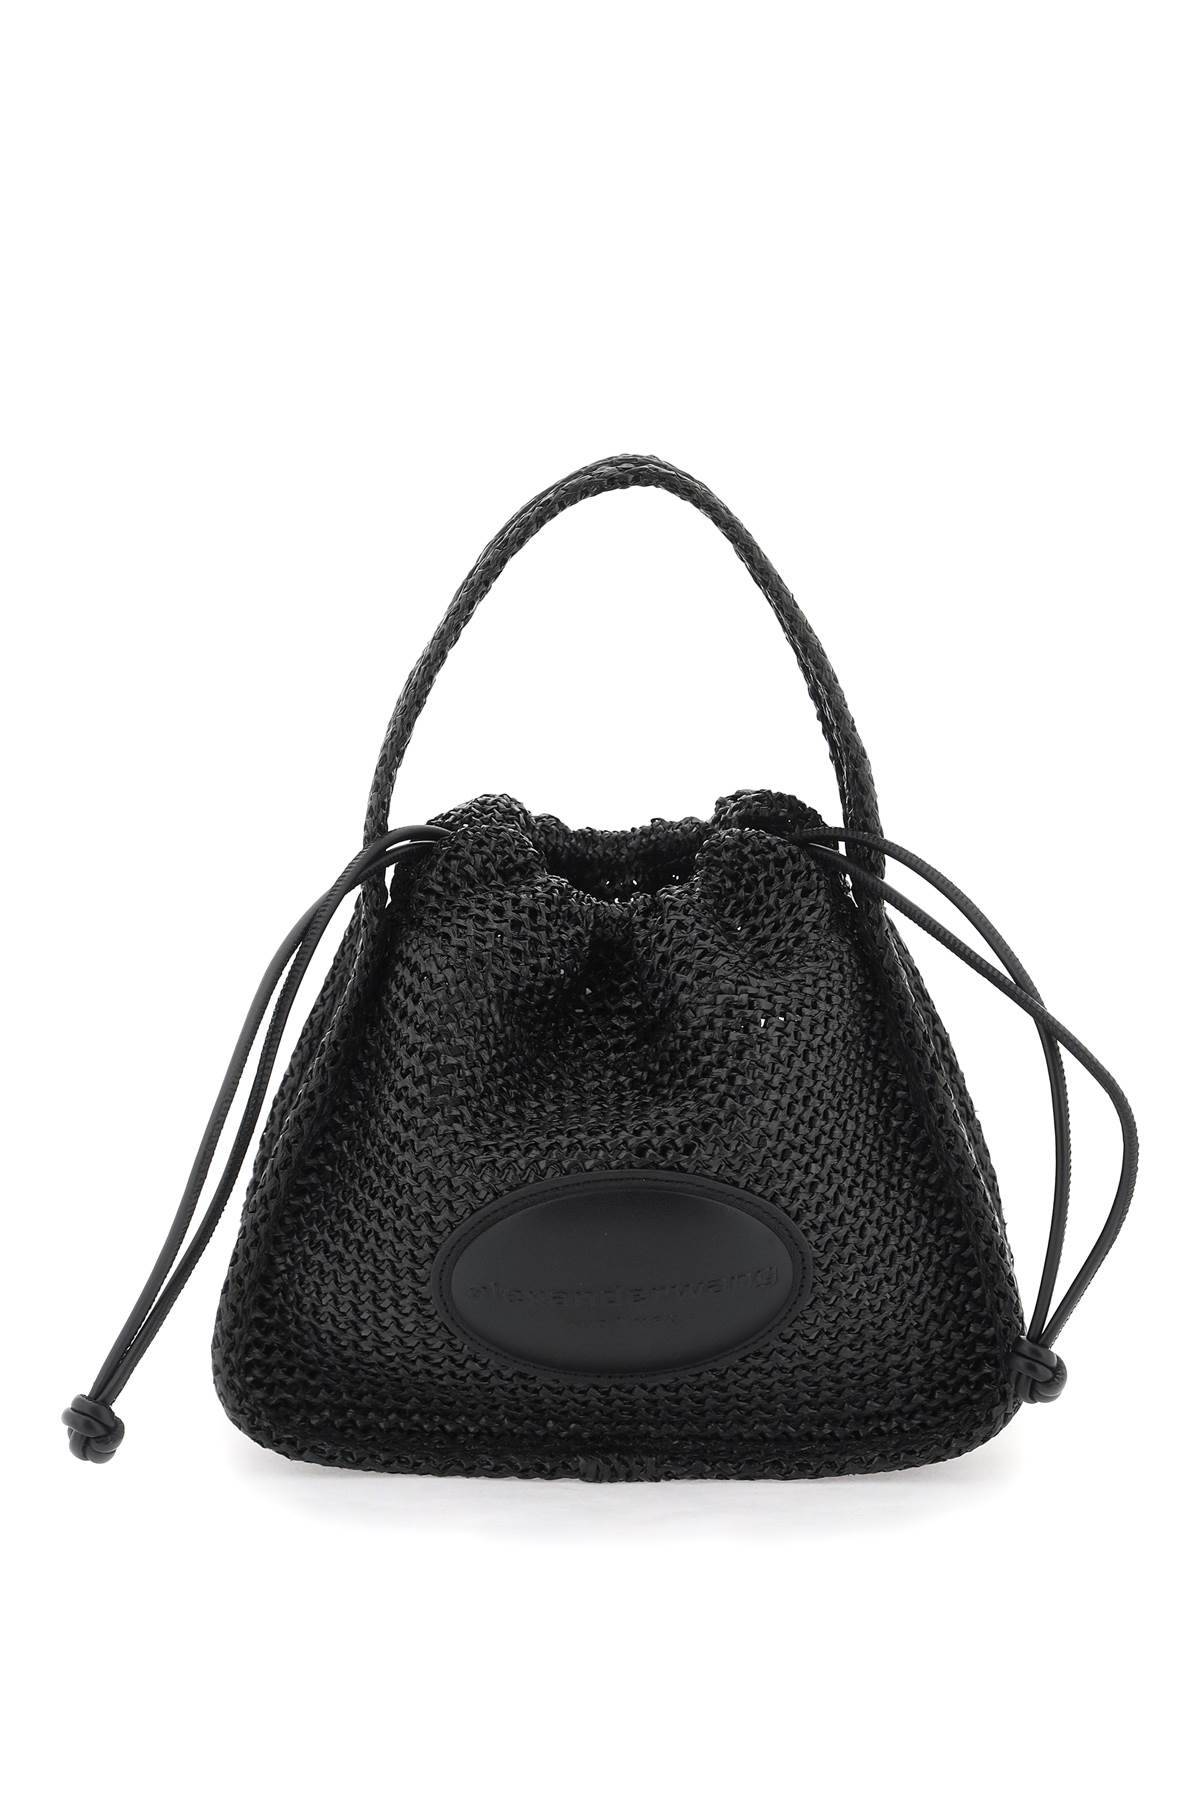 Alexander Wang 'ryan' Small Handbag In Raff In Black